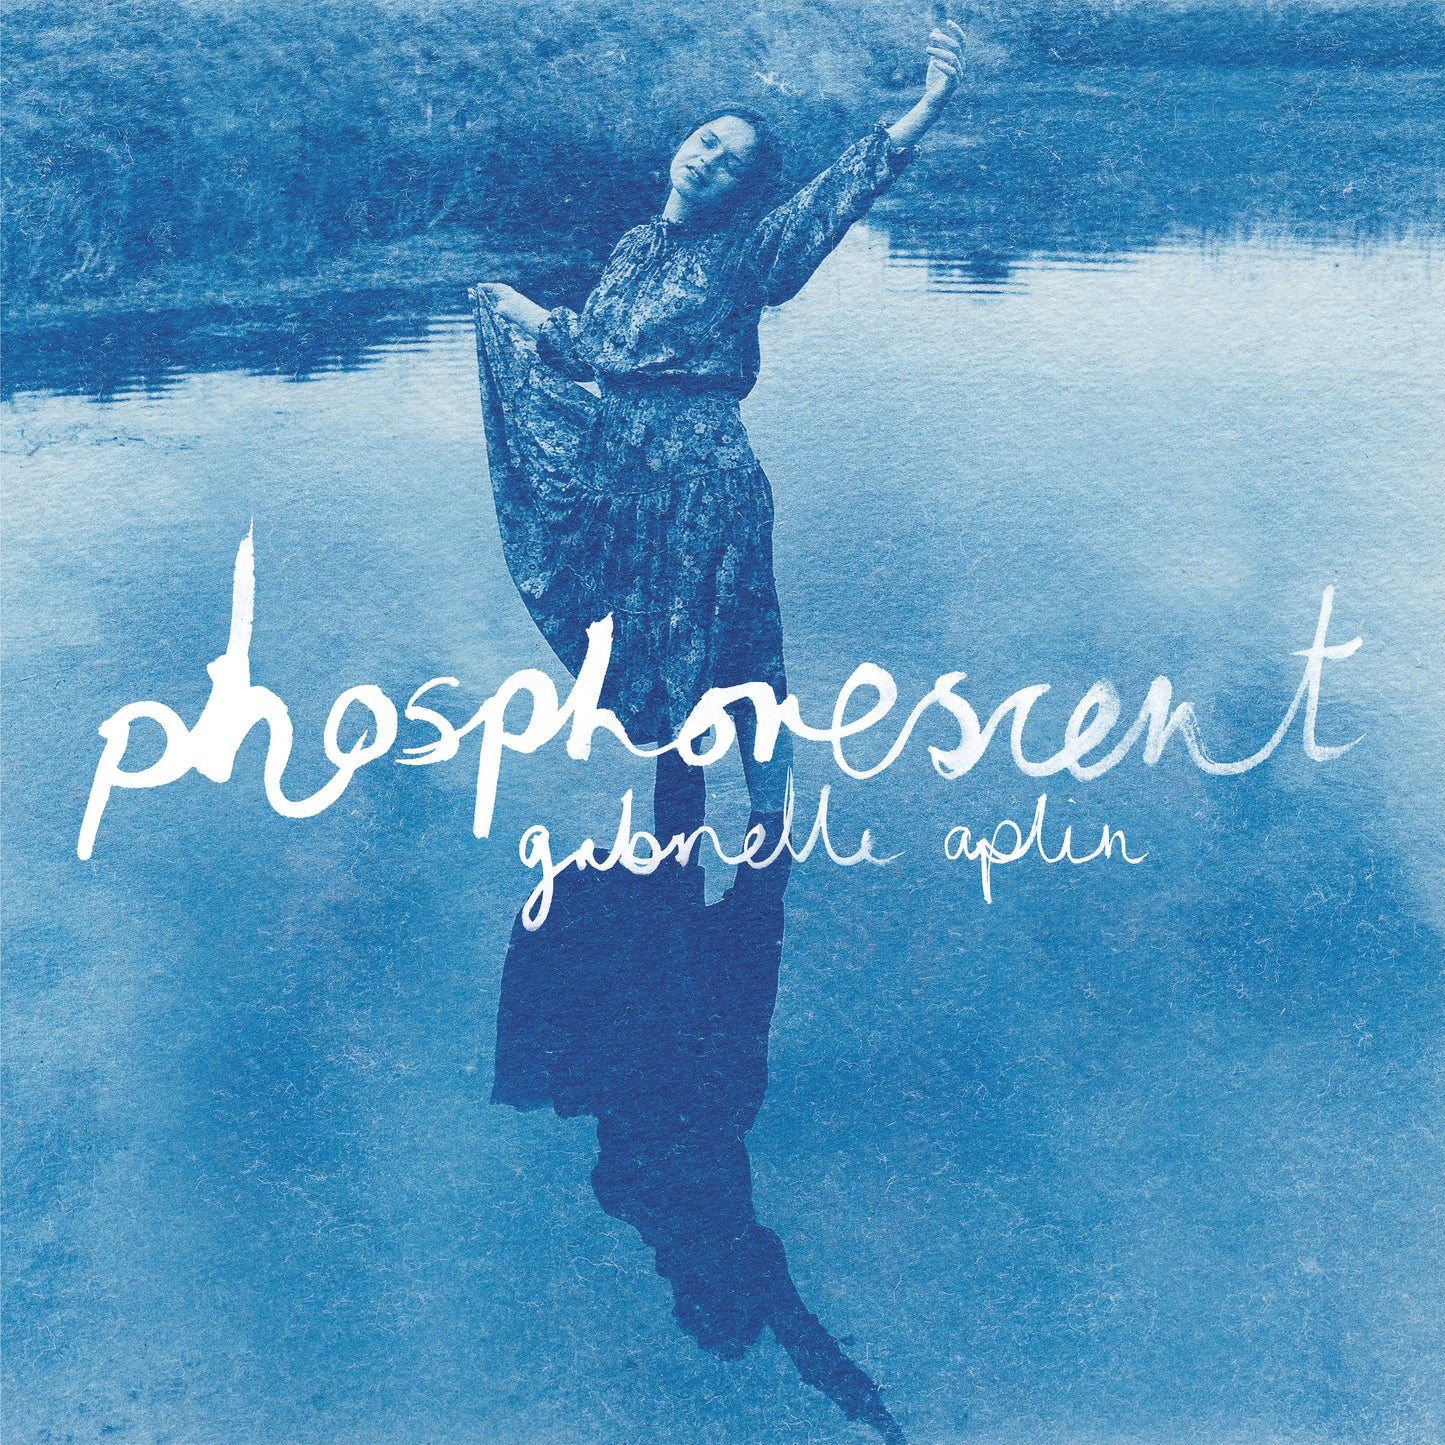 Phosphorescent - Cassette 